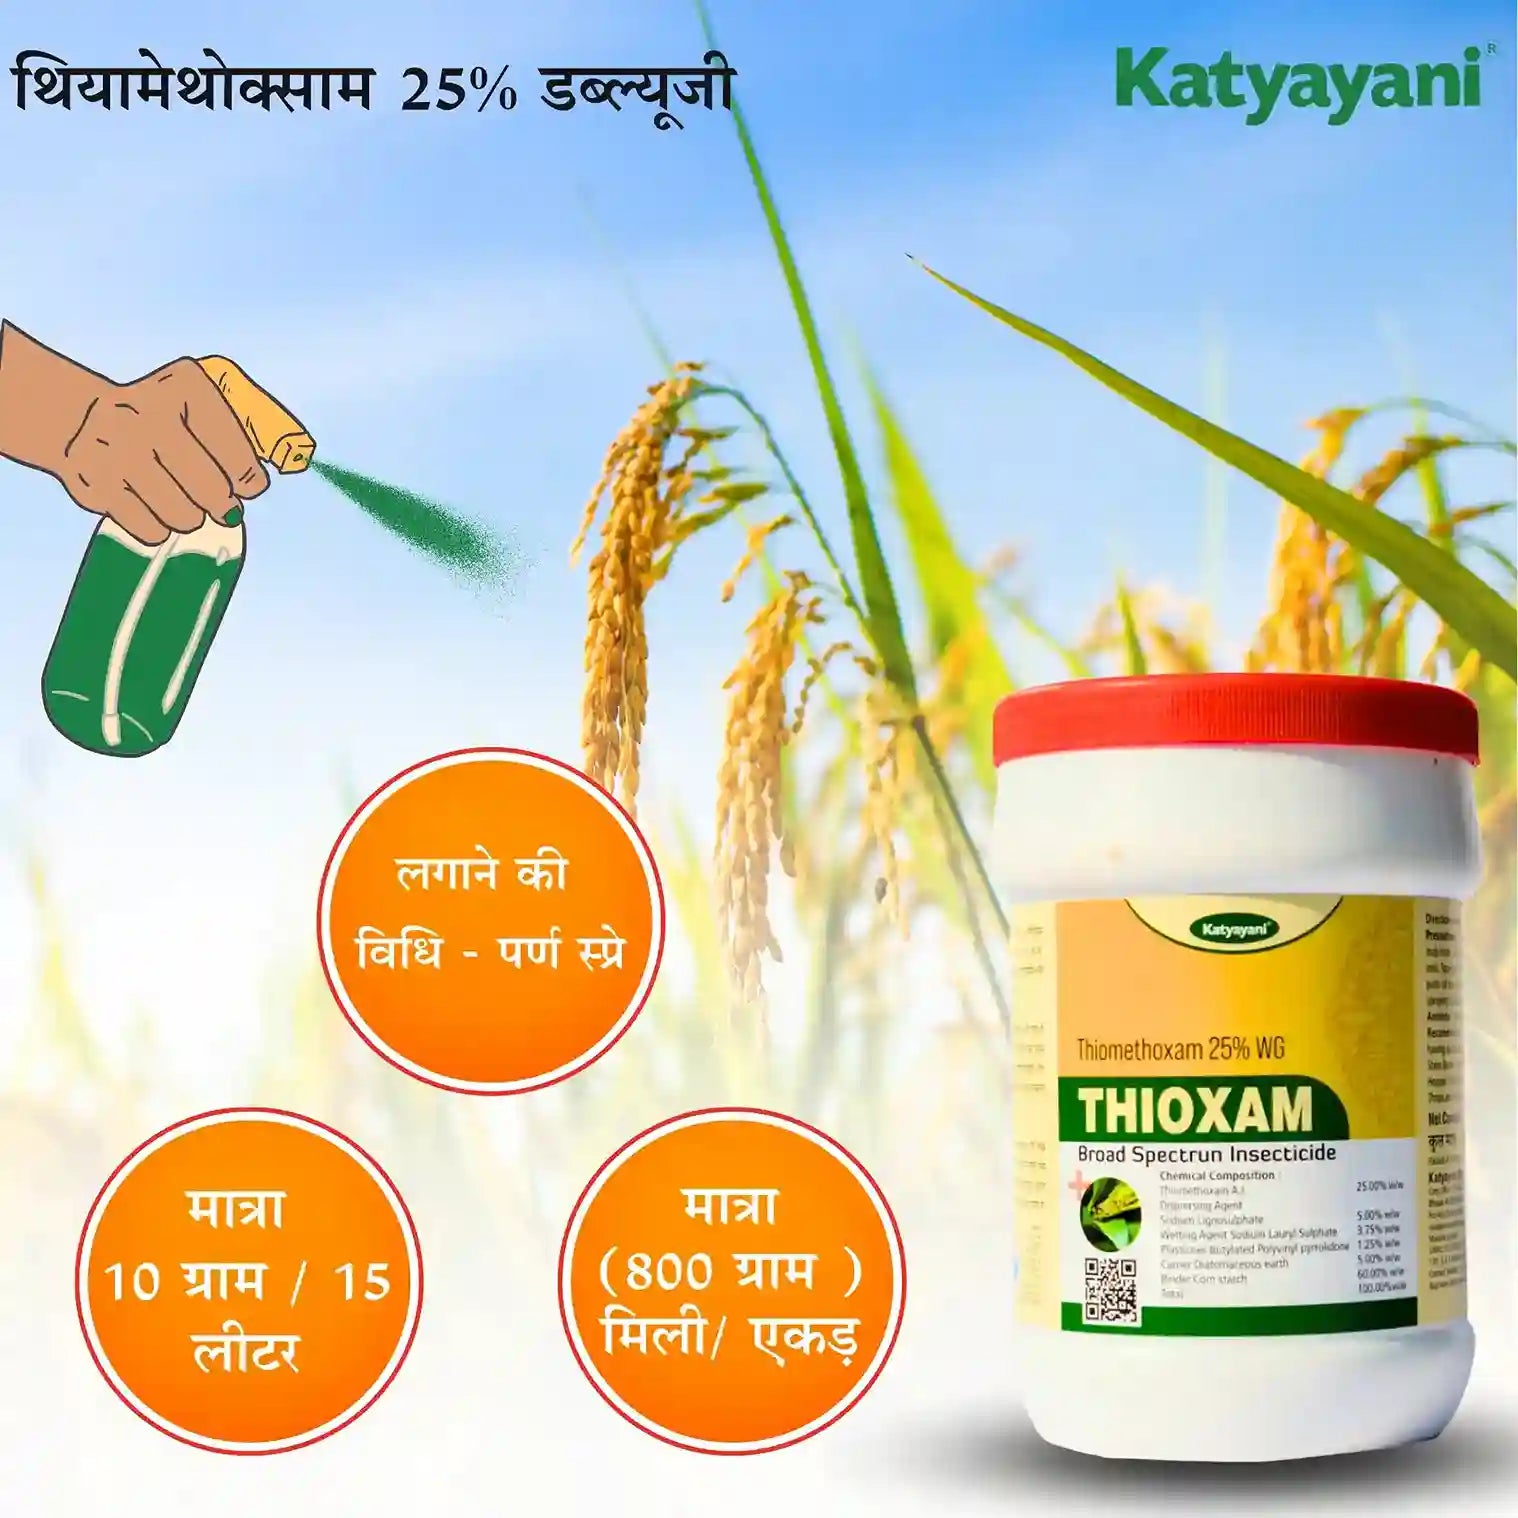 Katyayani Thioxam | Thiamethoxam 25 % wg Insecticide for crops